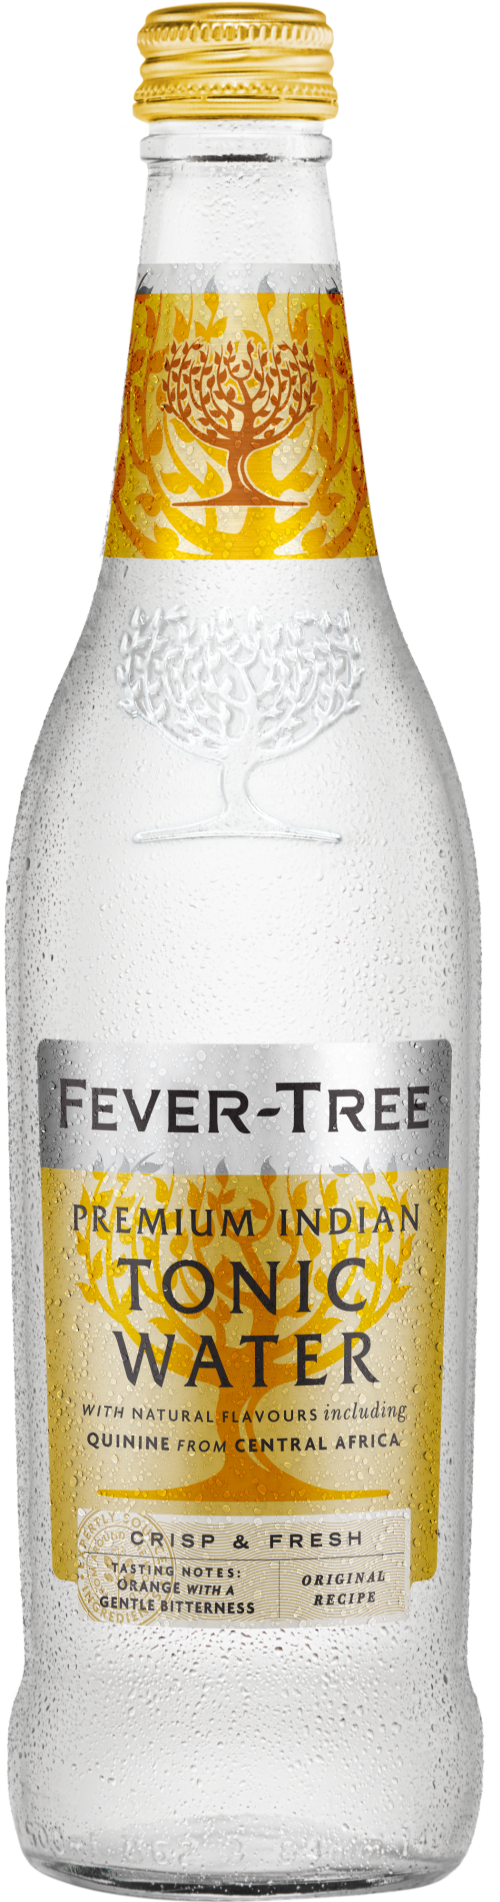 FEVER-TREE Premium Indian Tonic Water 500ml